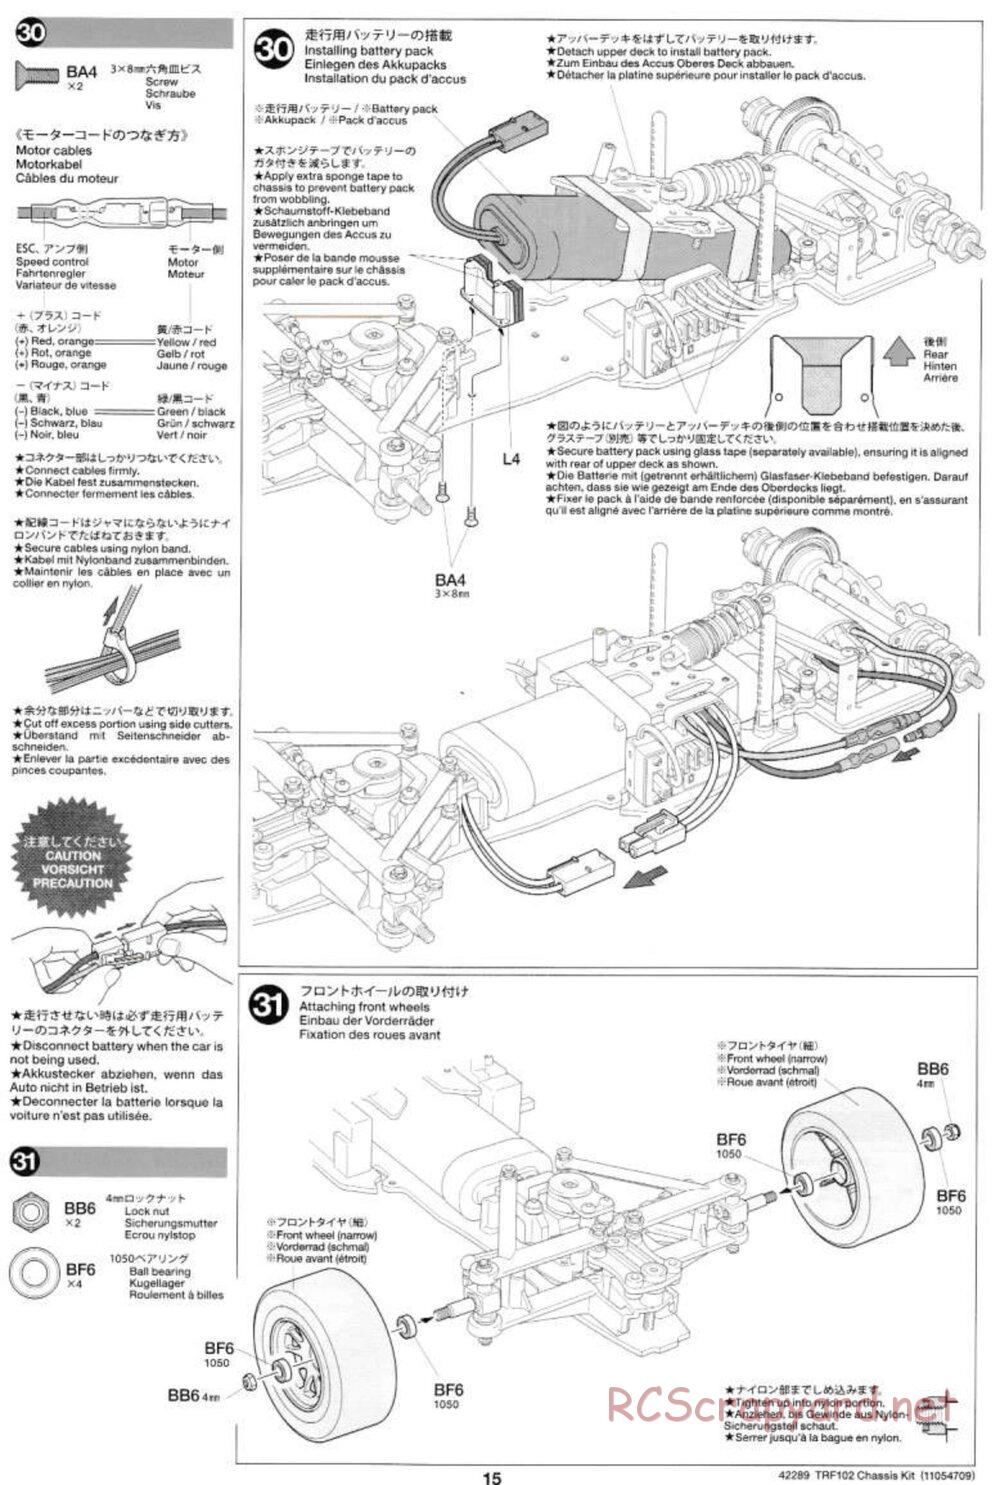 Tamiya - TRF102 Chassis - Manual - Page 15